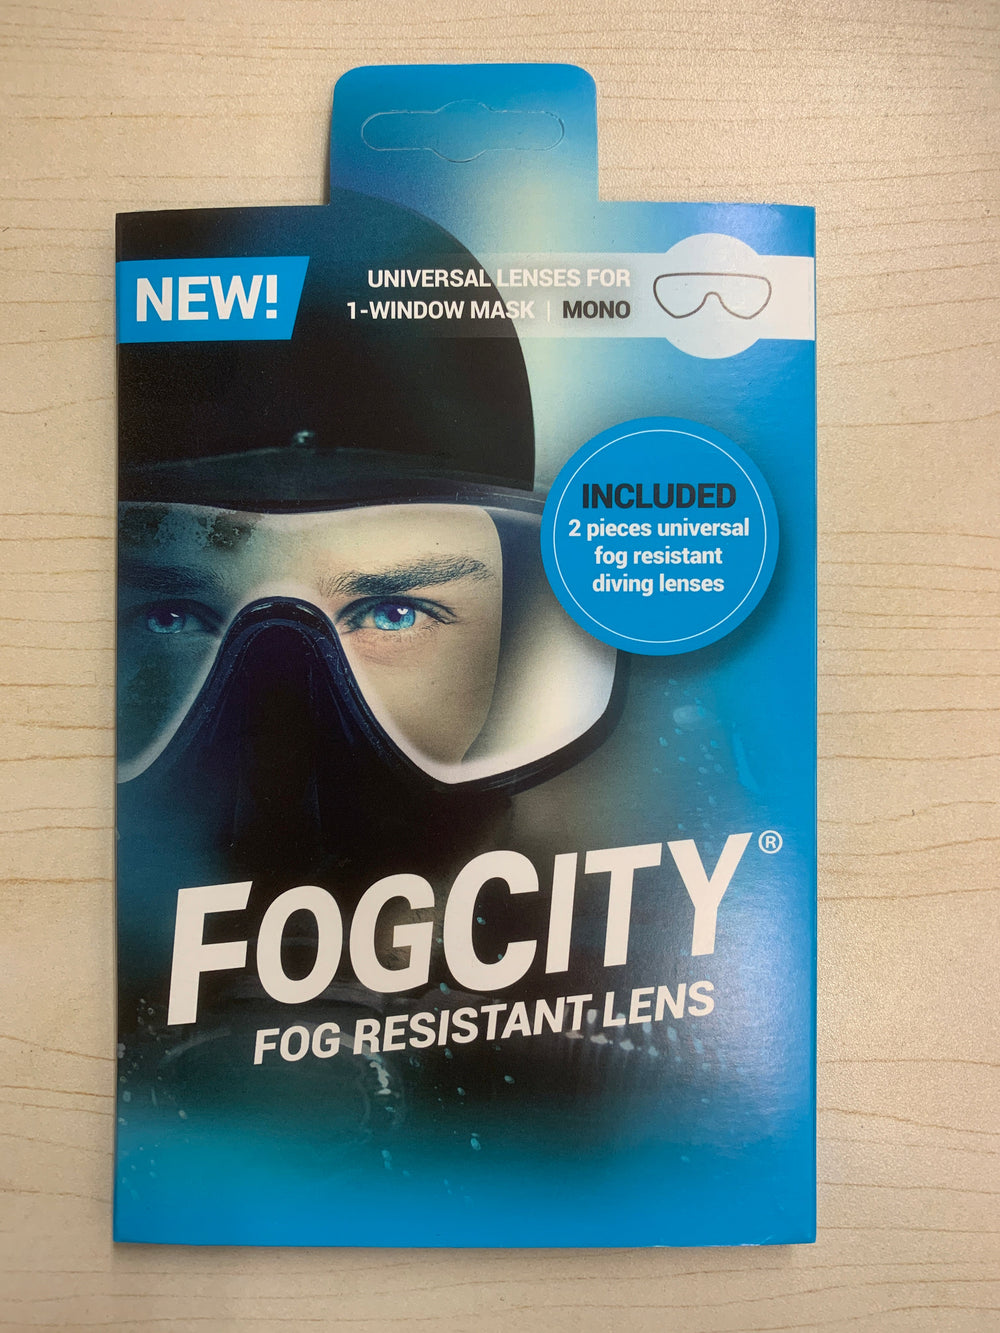 FOGCITY Fog Resistant Lens 1-window mask / Mono - Oyster Diving